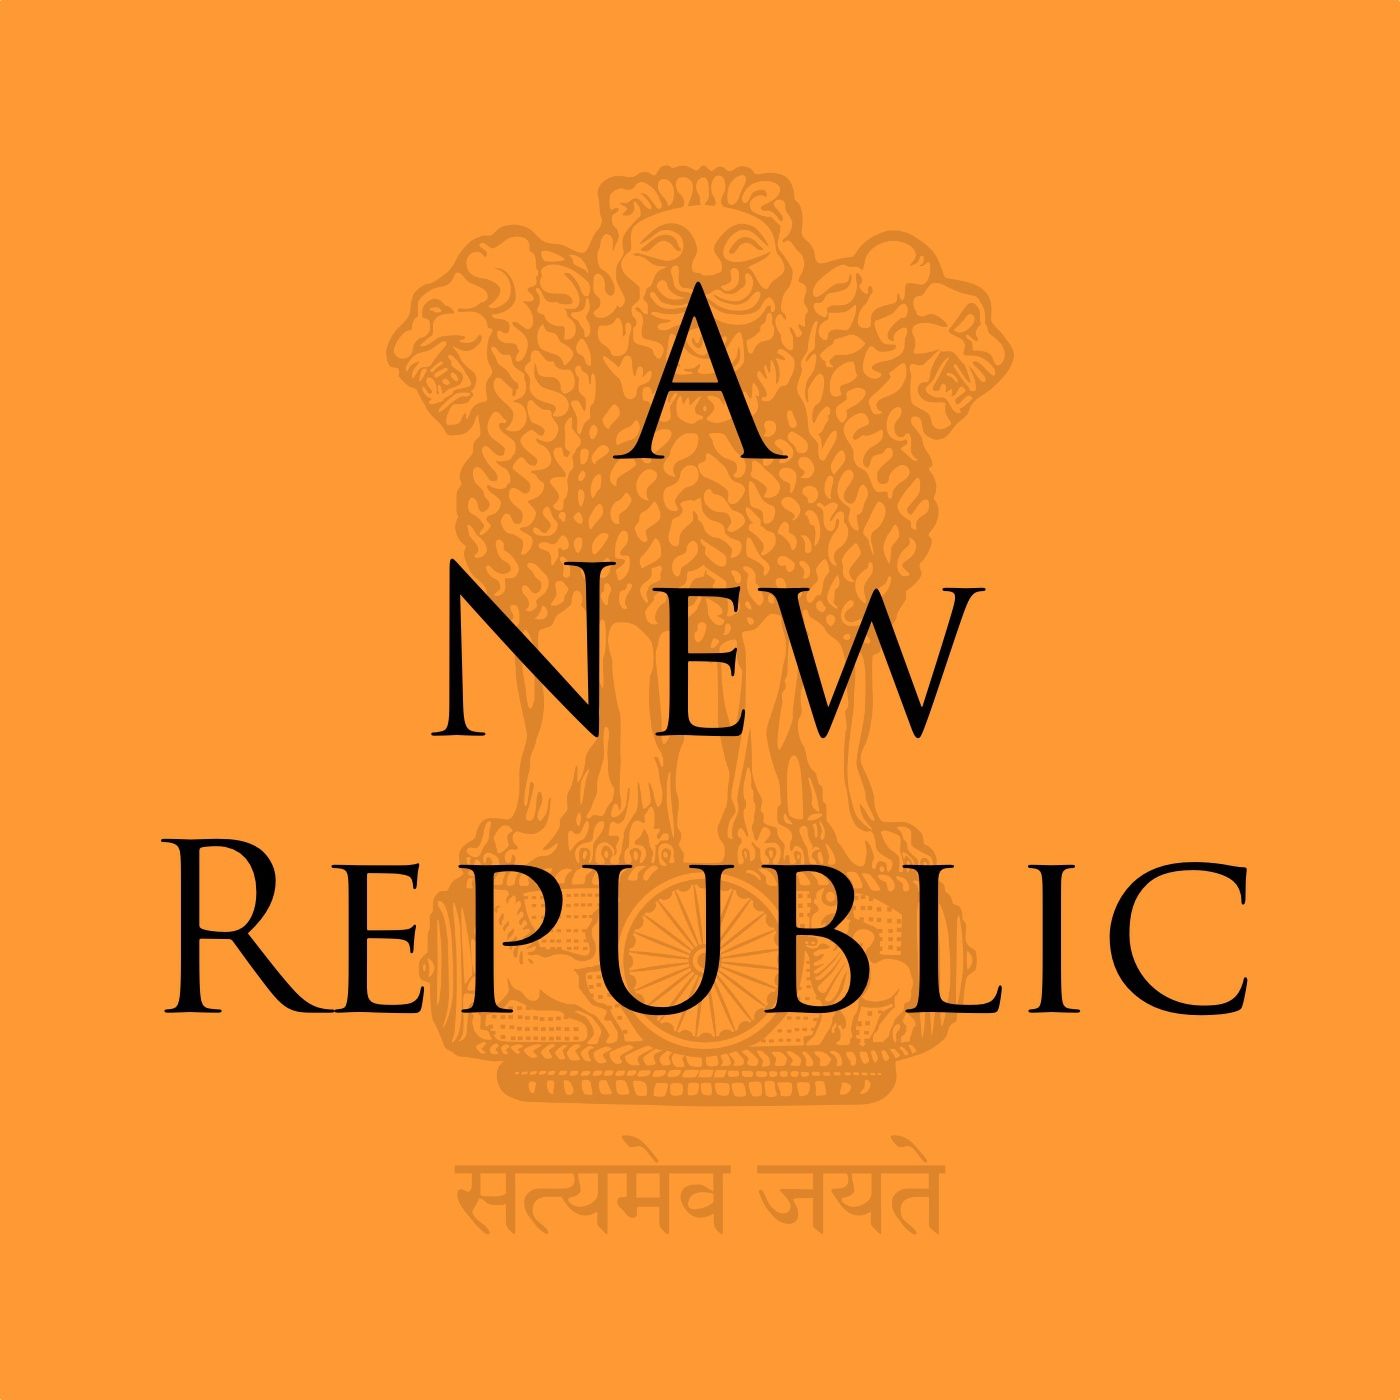 A New Republic - Episode 8: Dyarchy